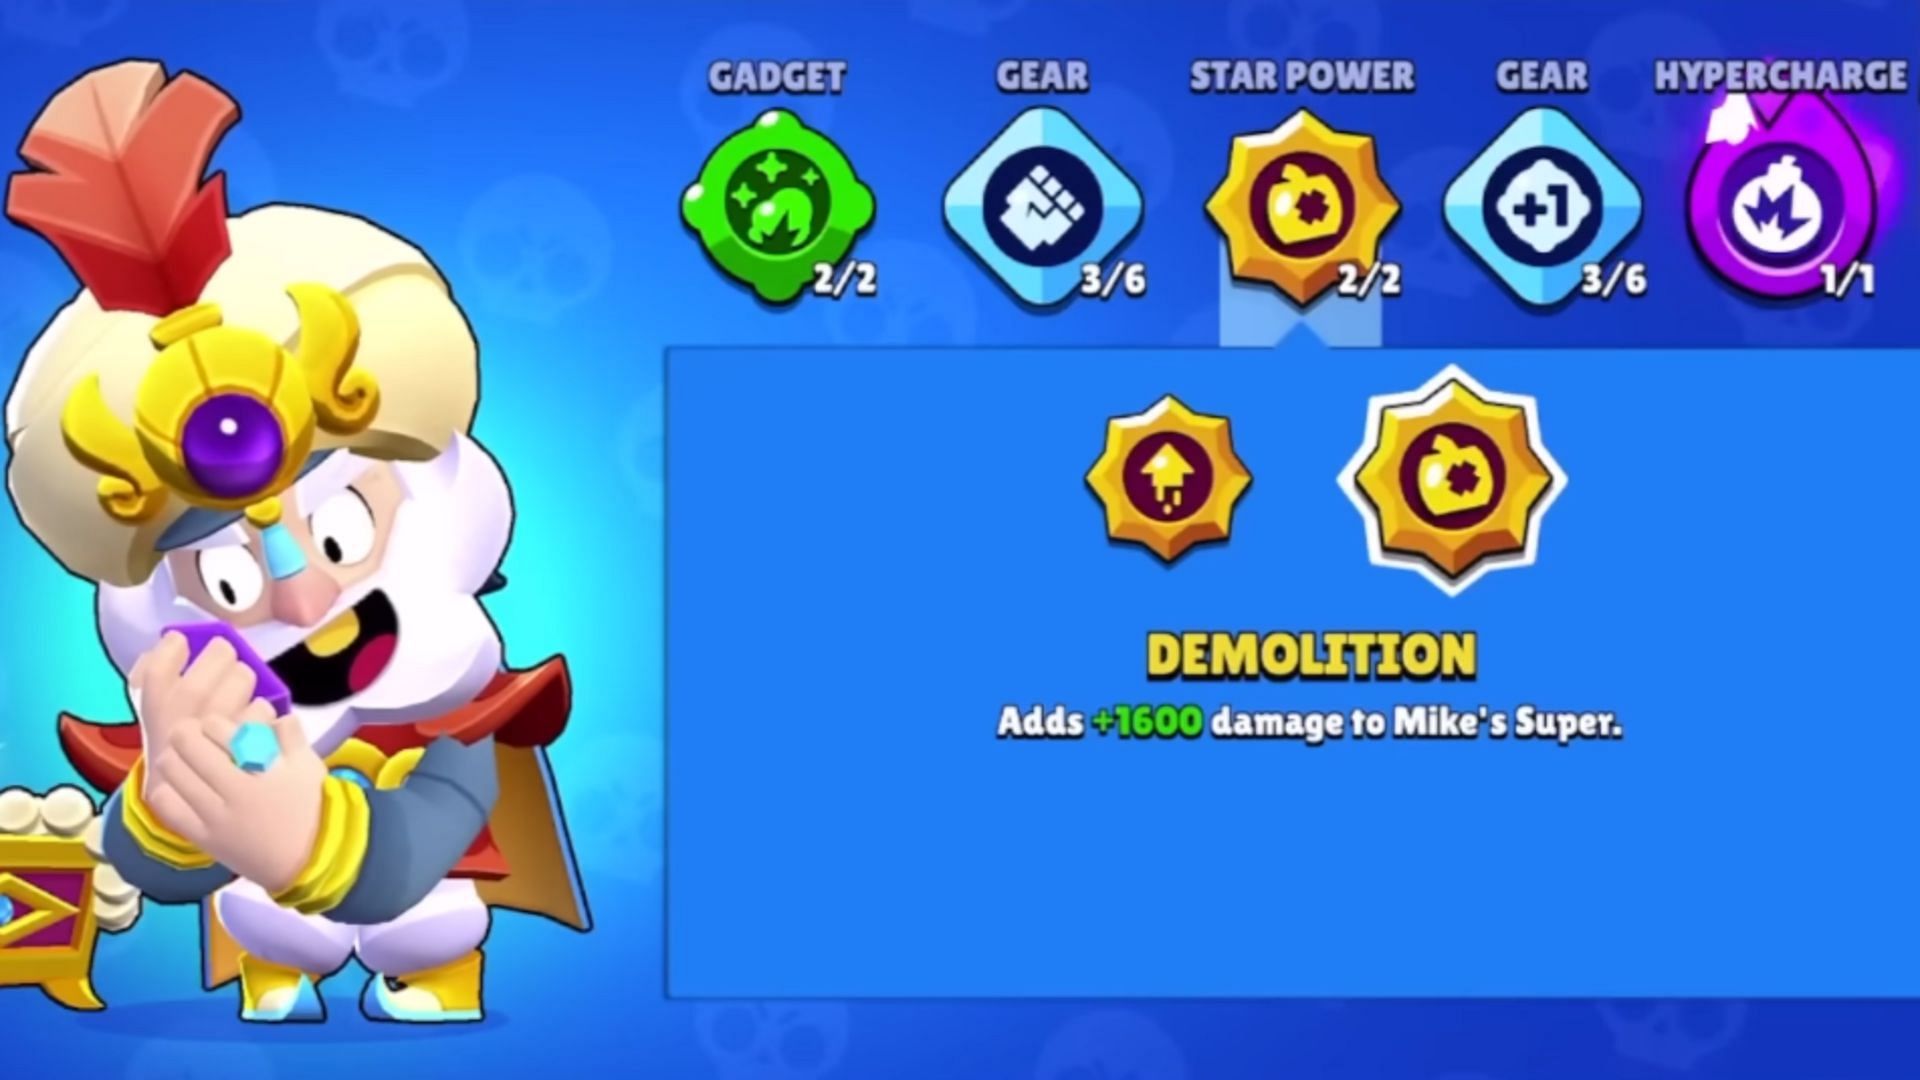 Demolition Star Power (Image via Supercell)